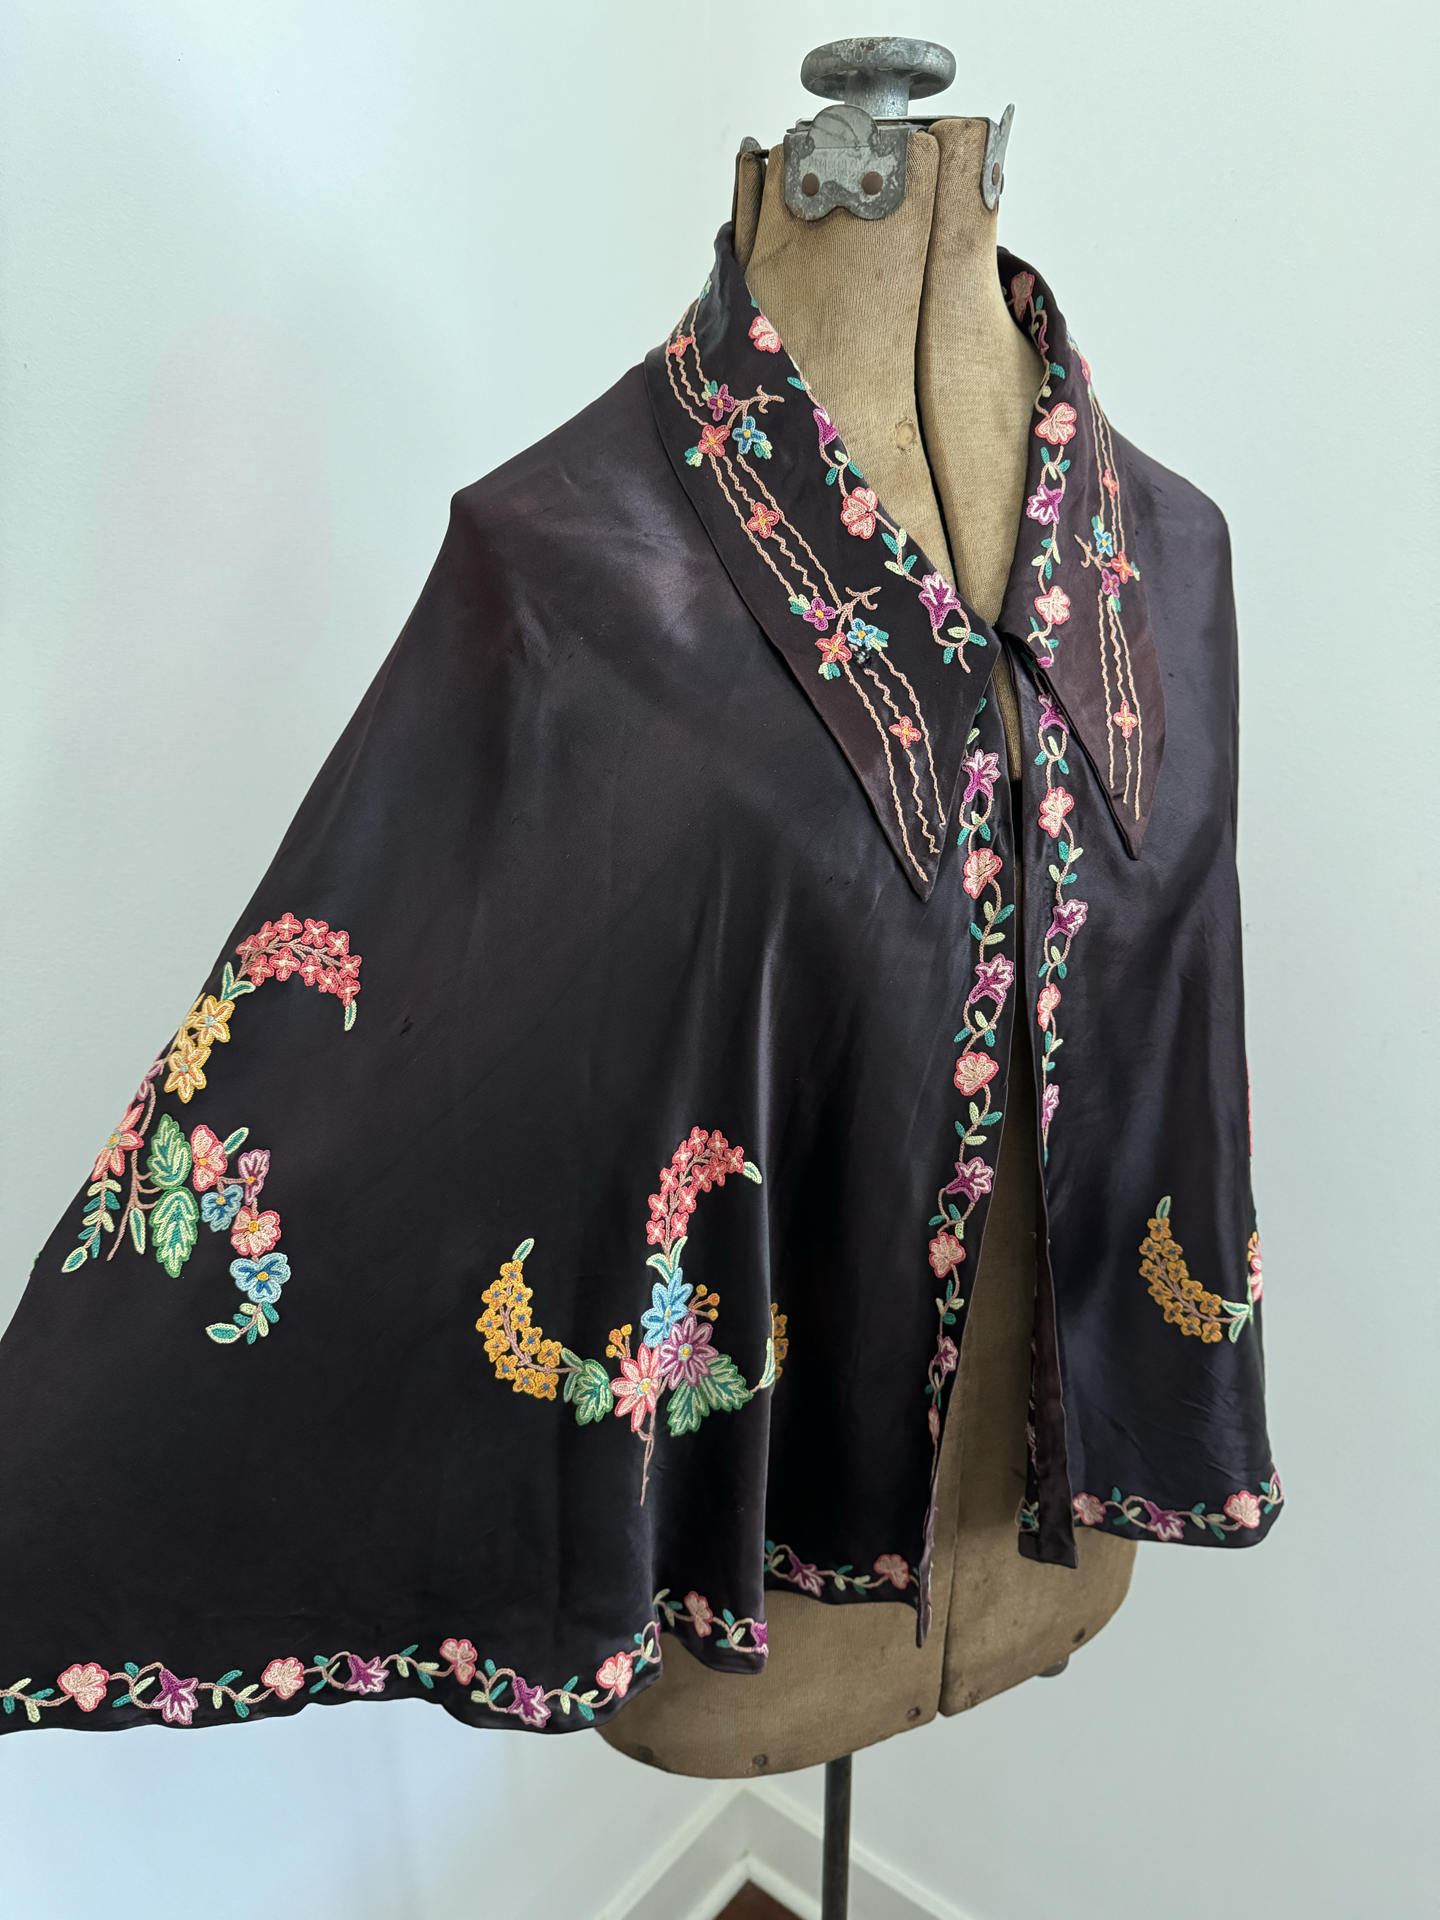 1930s Black Liquid Satin Cape w/ Exquisite Embroidery + Oversized Collar